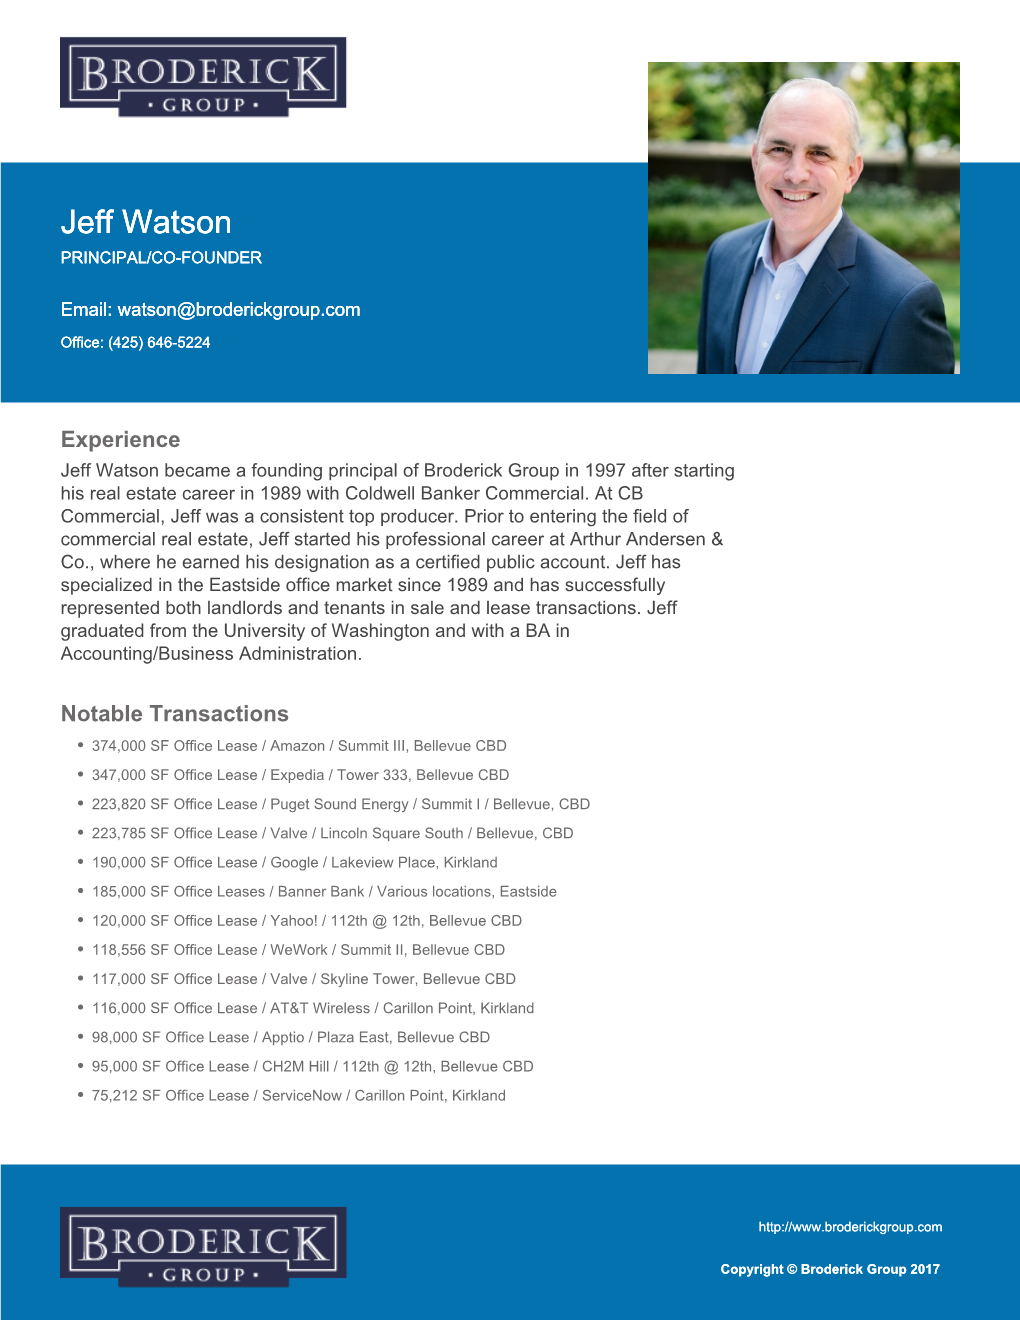 Jeff Watson , Principal/Co-Founder